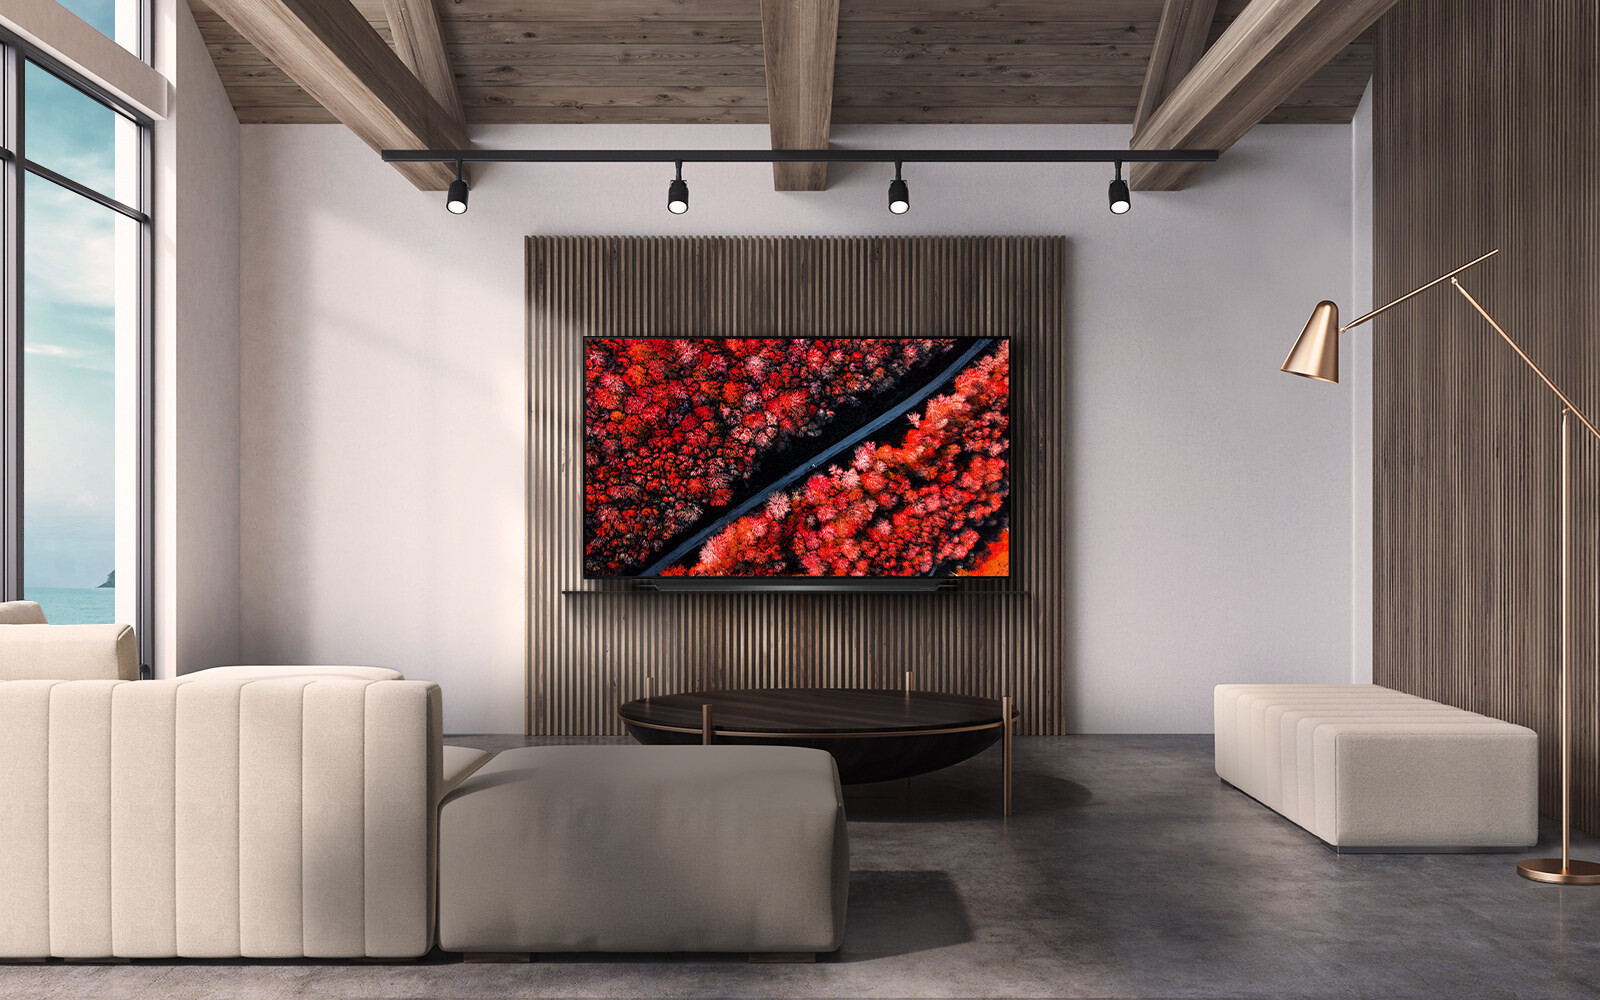 LG unveils its Black Friday sale on 2019 OLED TVs - comicsahoy.com News